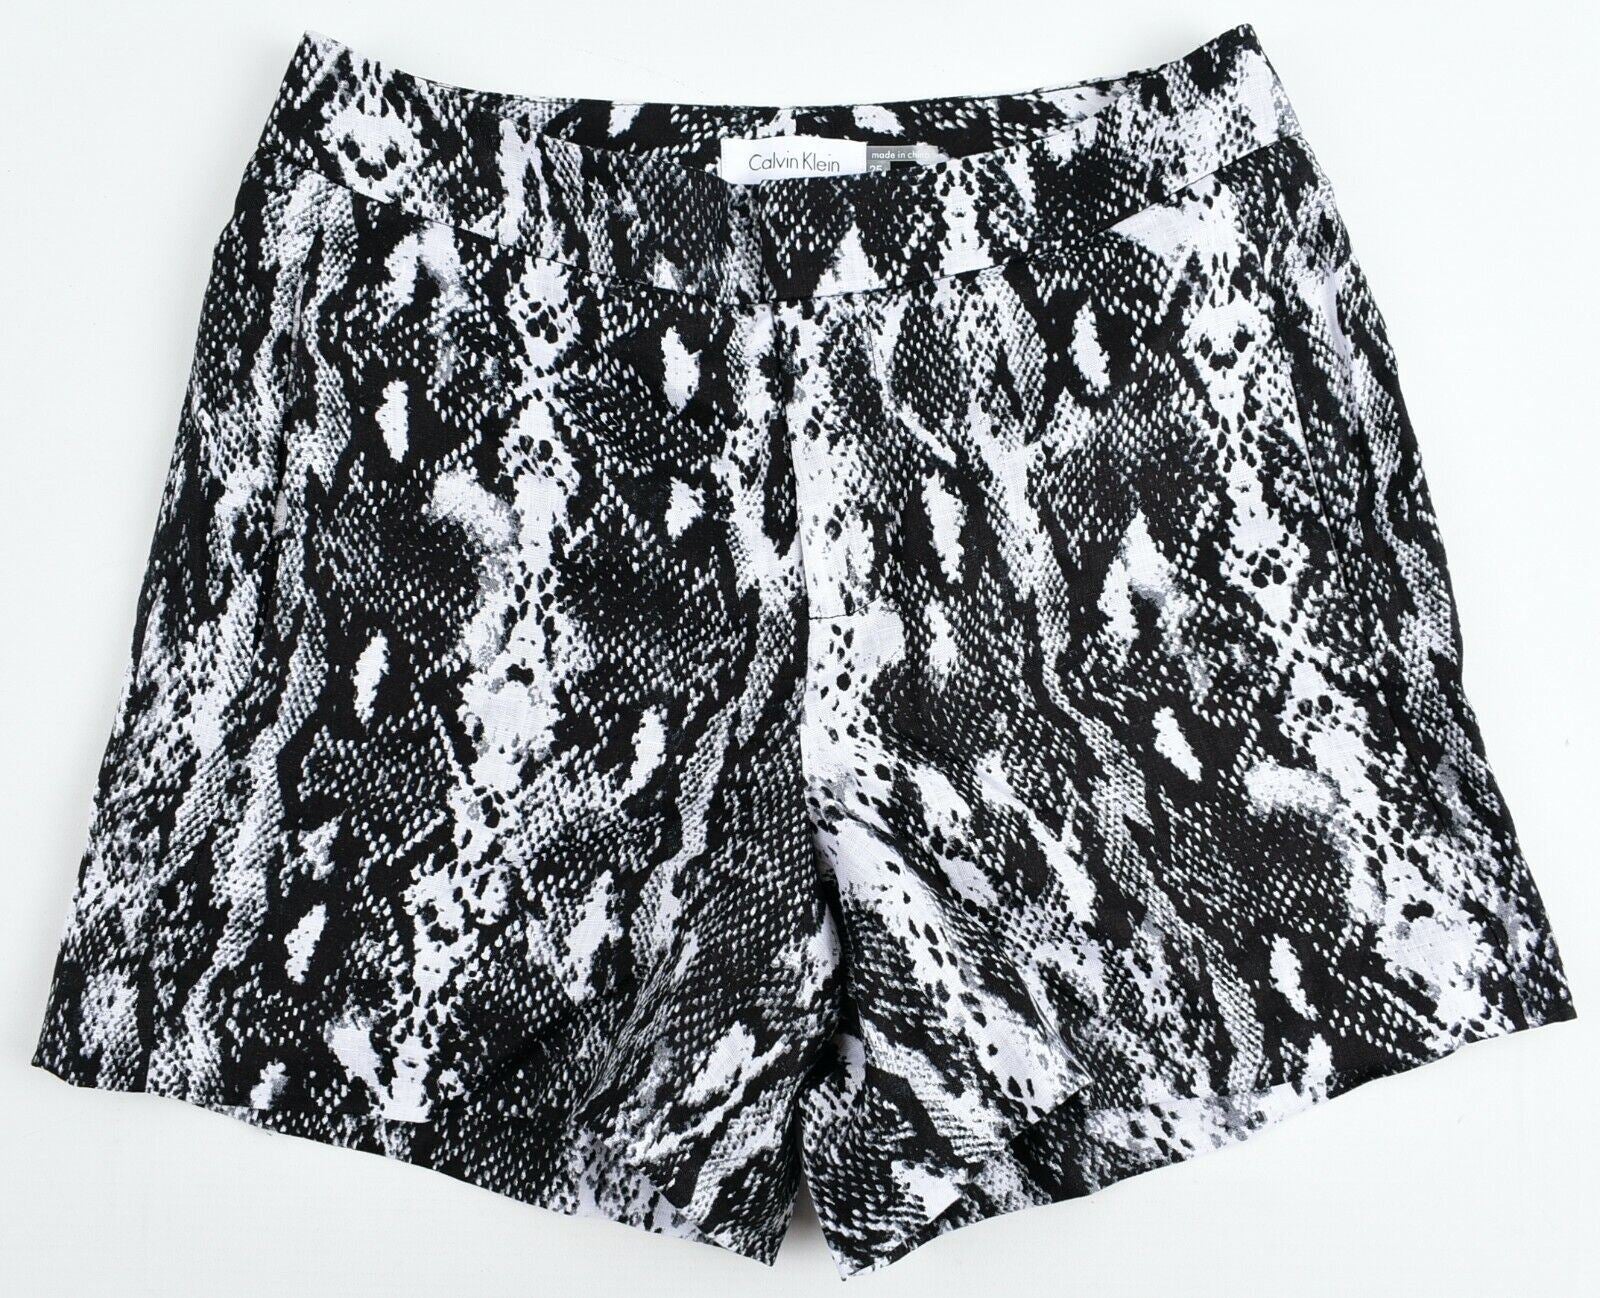 CALVIN KLEIN Women's Shorts, 100% Linen, Black/White Animal Print, size W25